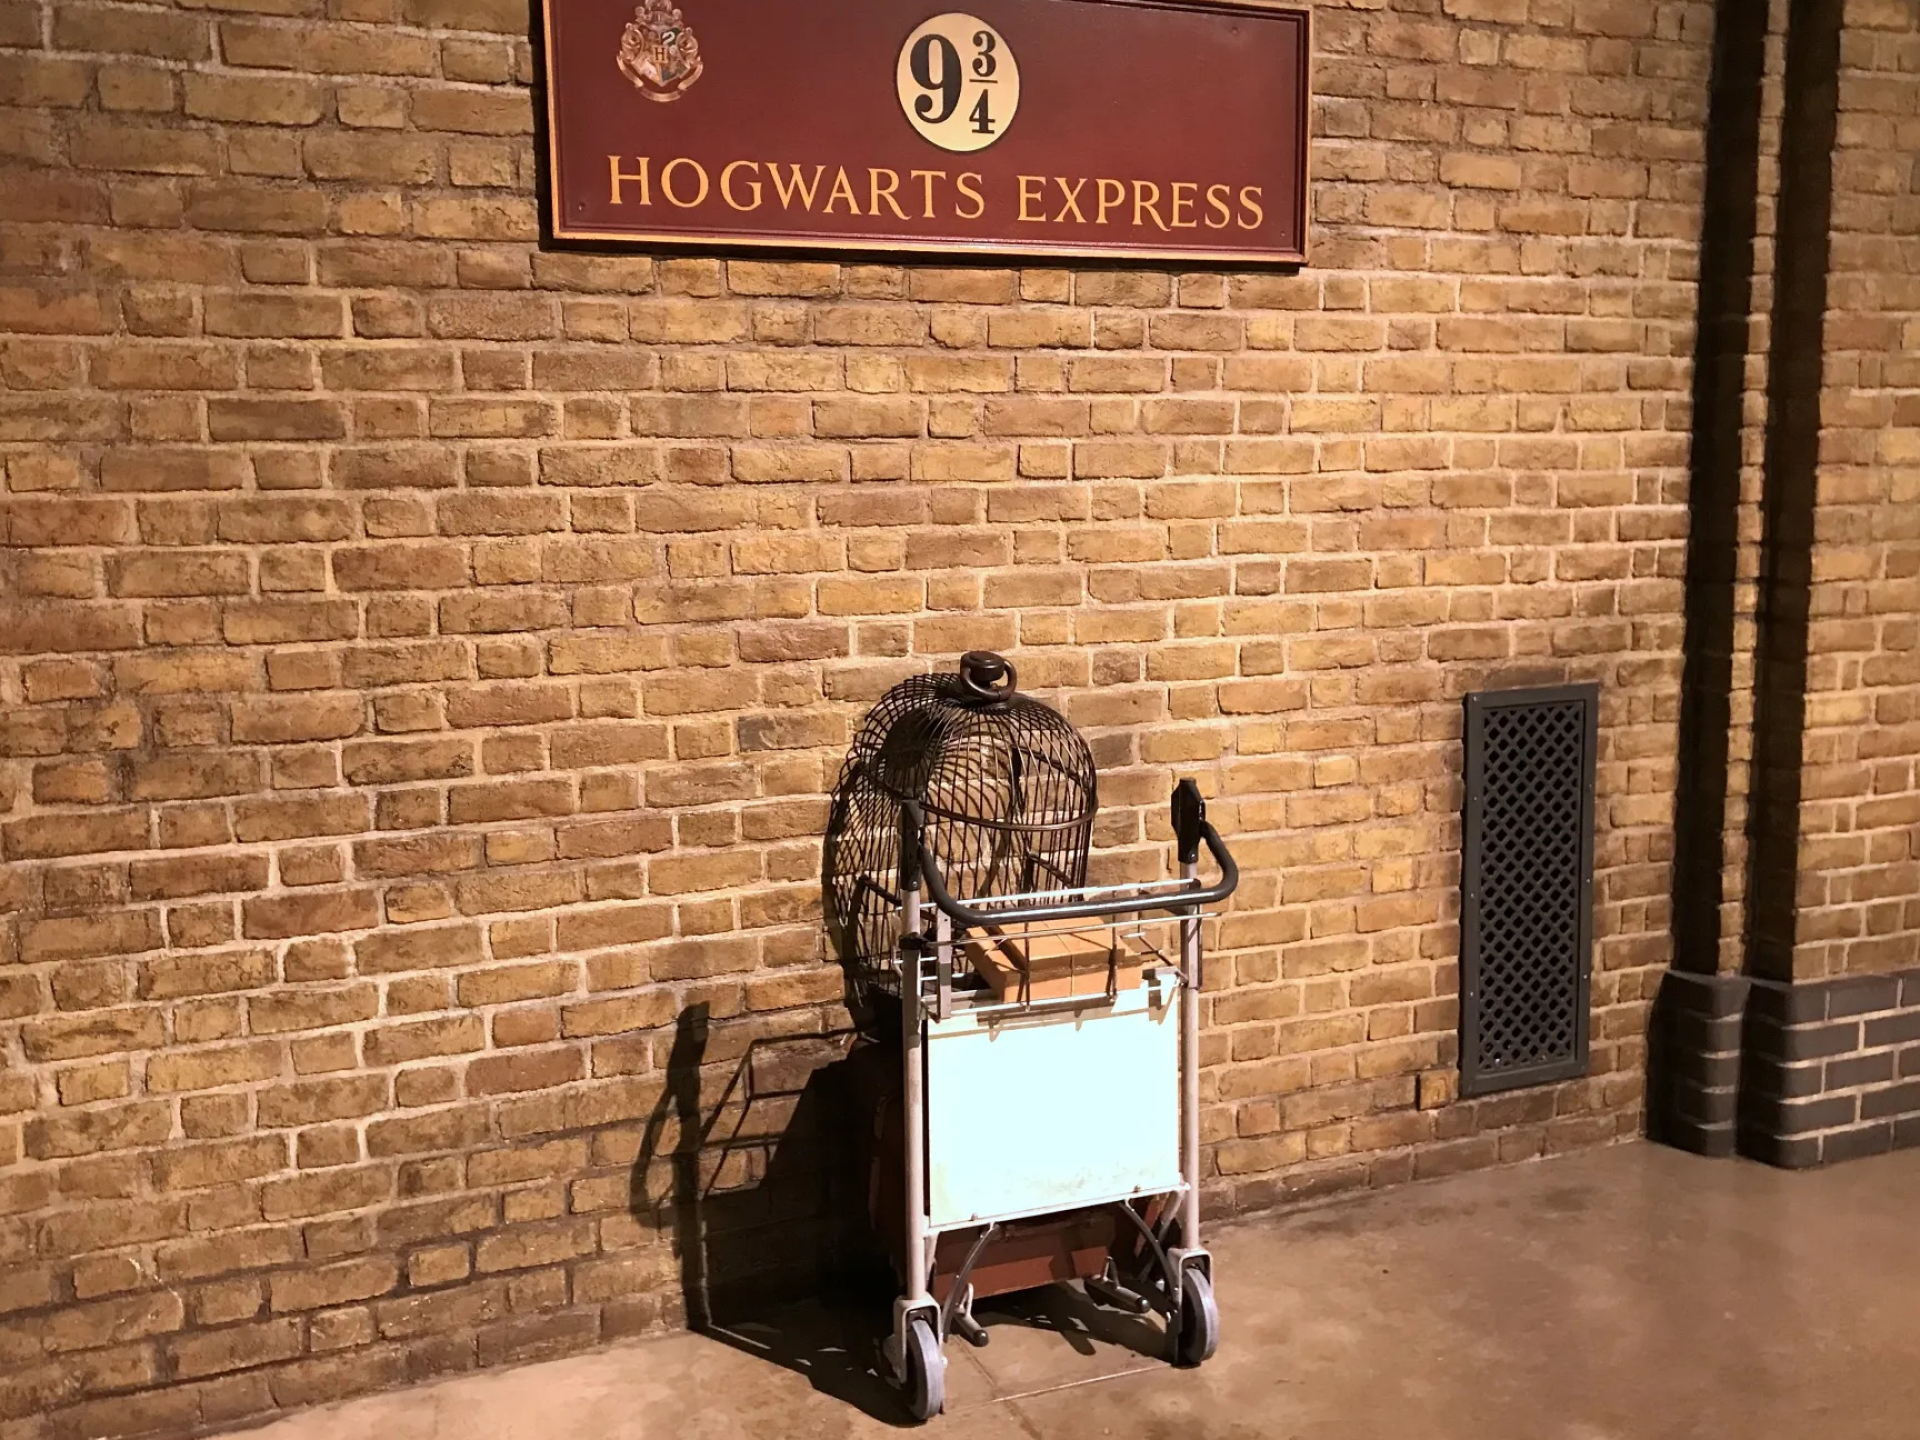 Platform 9 3/4 movies, Harry Potter Studio Tour London, Behind-the-scenes visit, Magical experience, 1920x1440 HD Desktop